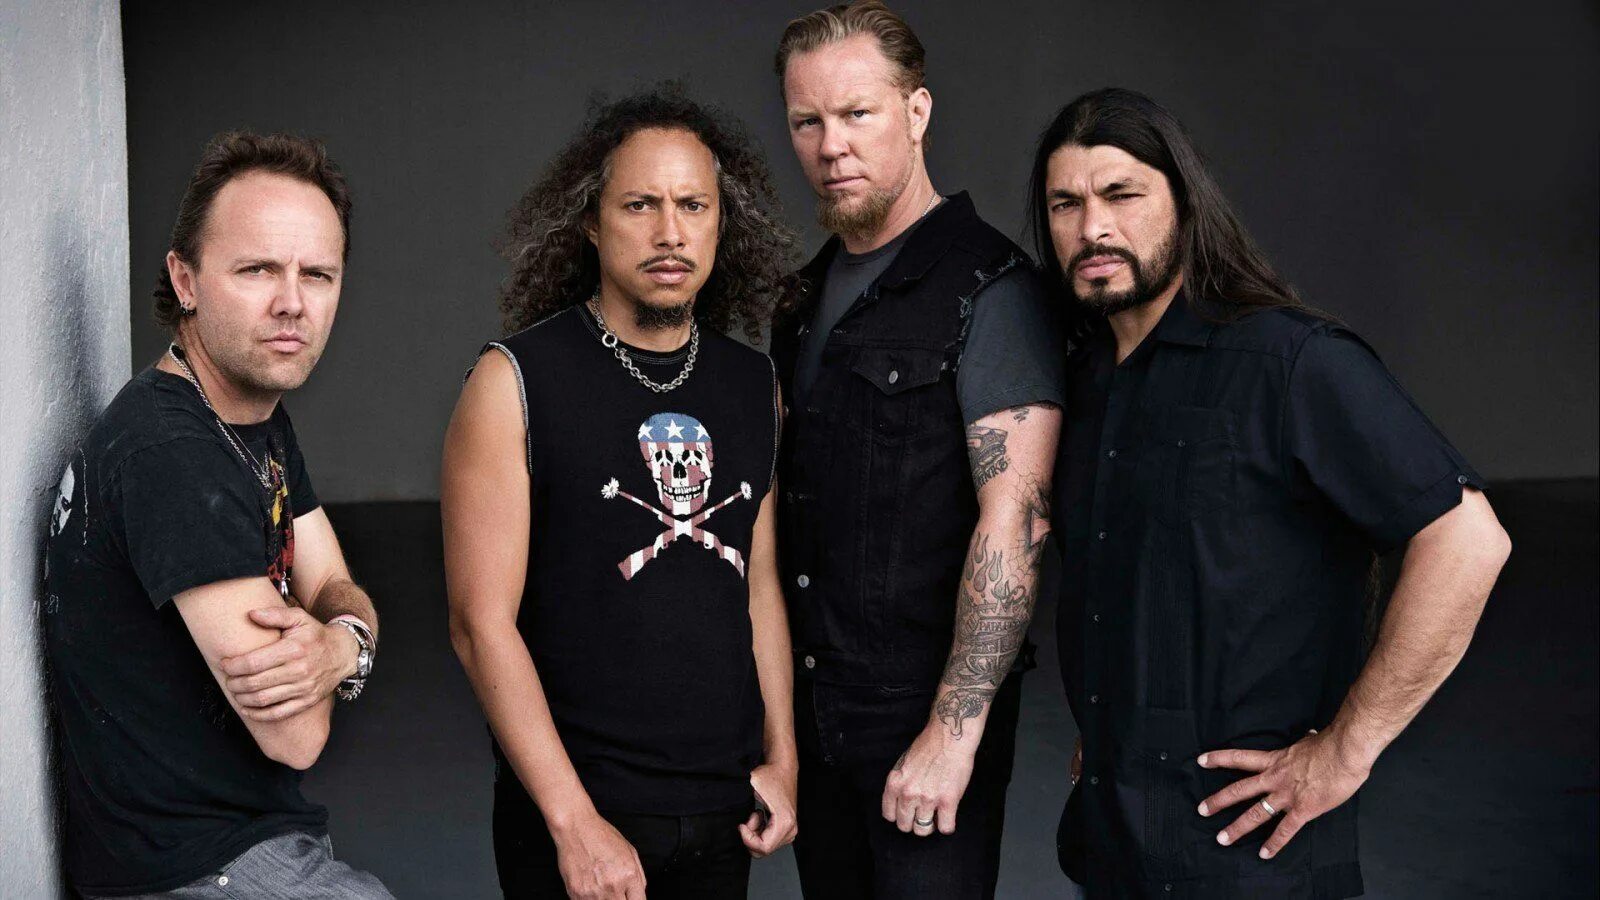 Группа металлика. Рок группа Metallica. Металлика фото группы. Металлика состав.